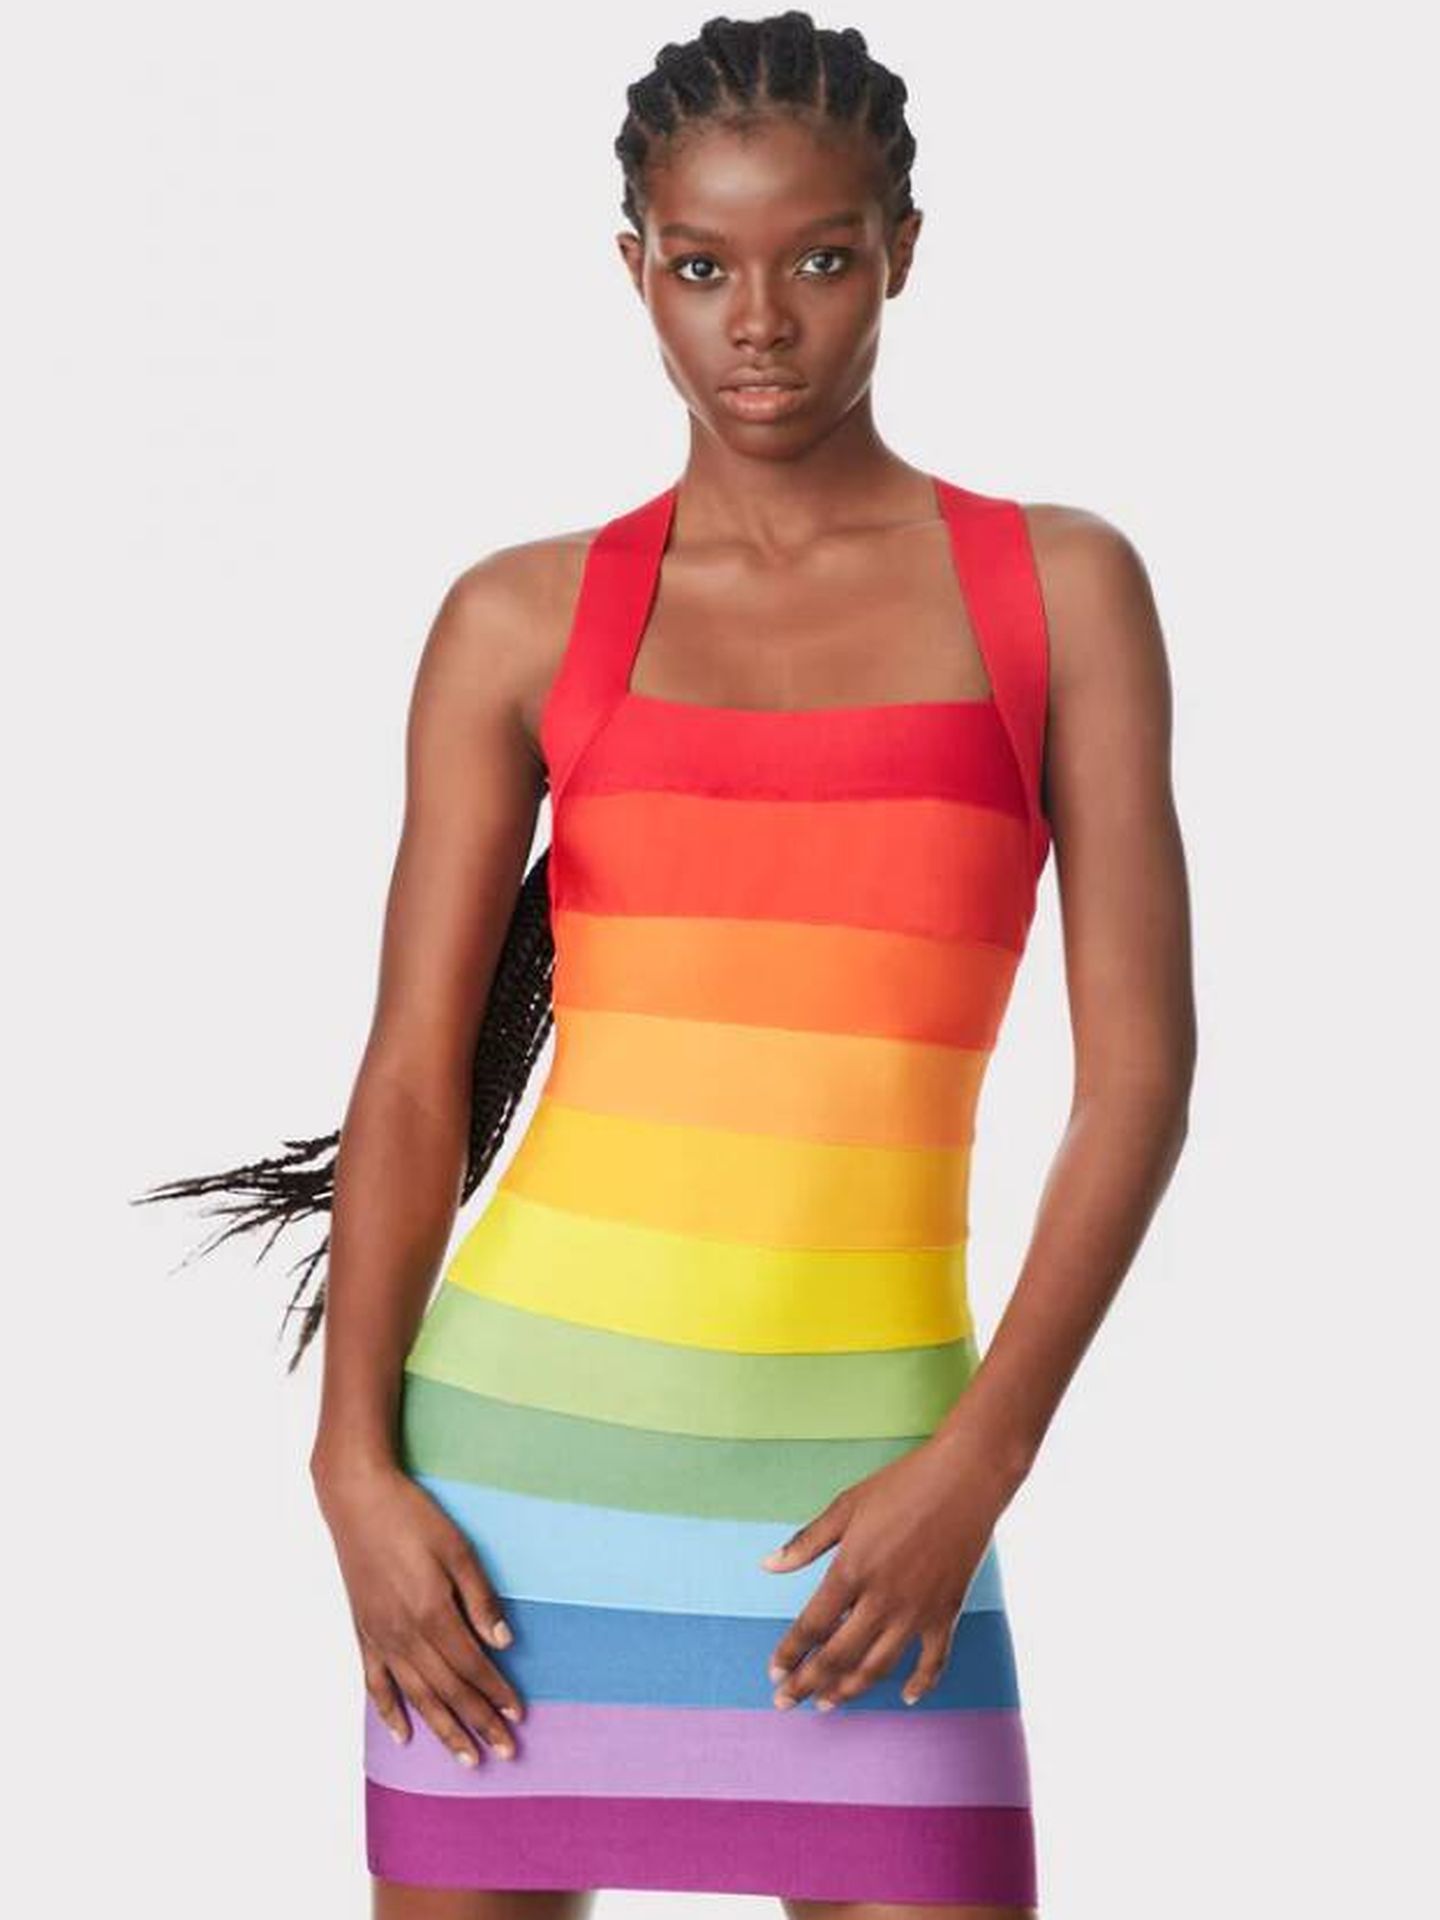 Modelo Rainbow de la firma Hervé Léger. (Cortesía)